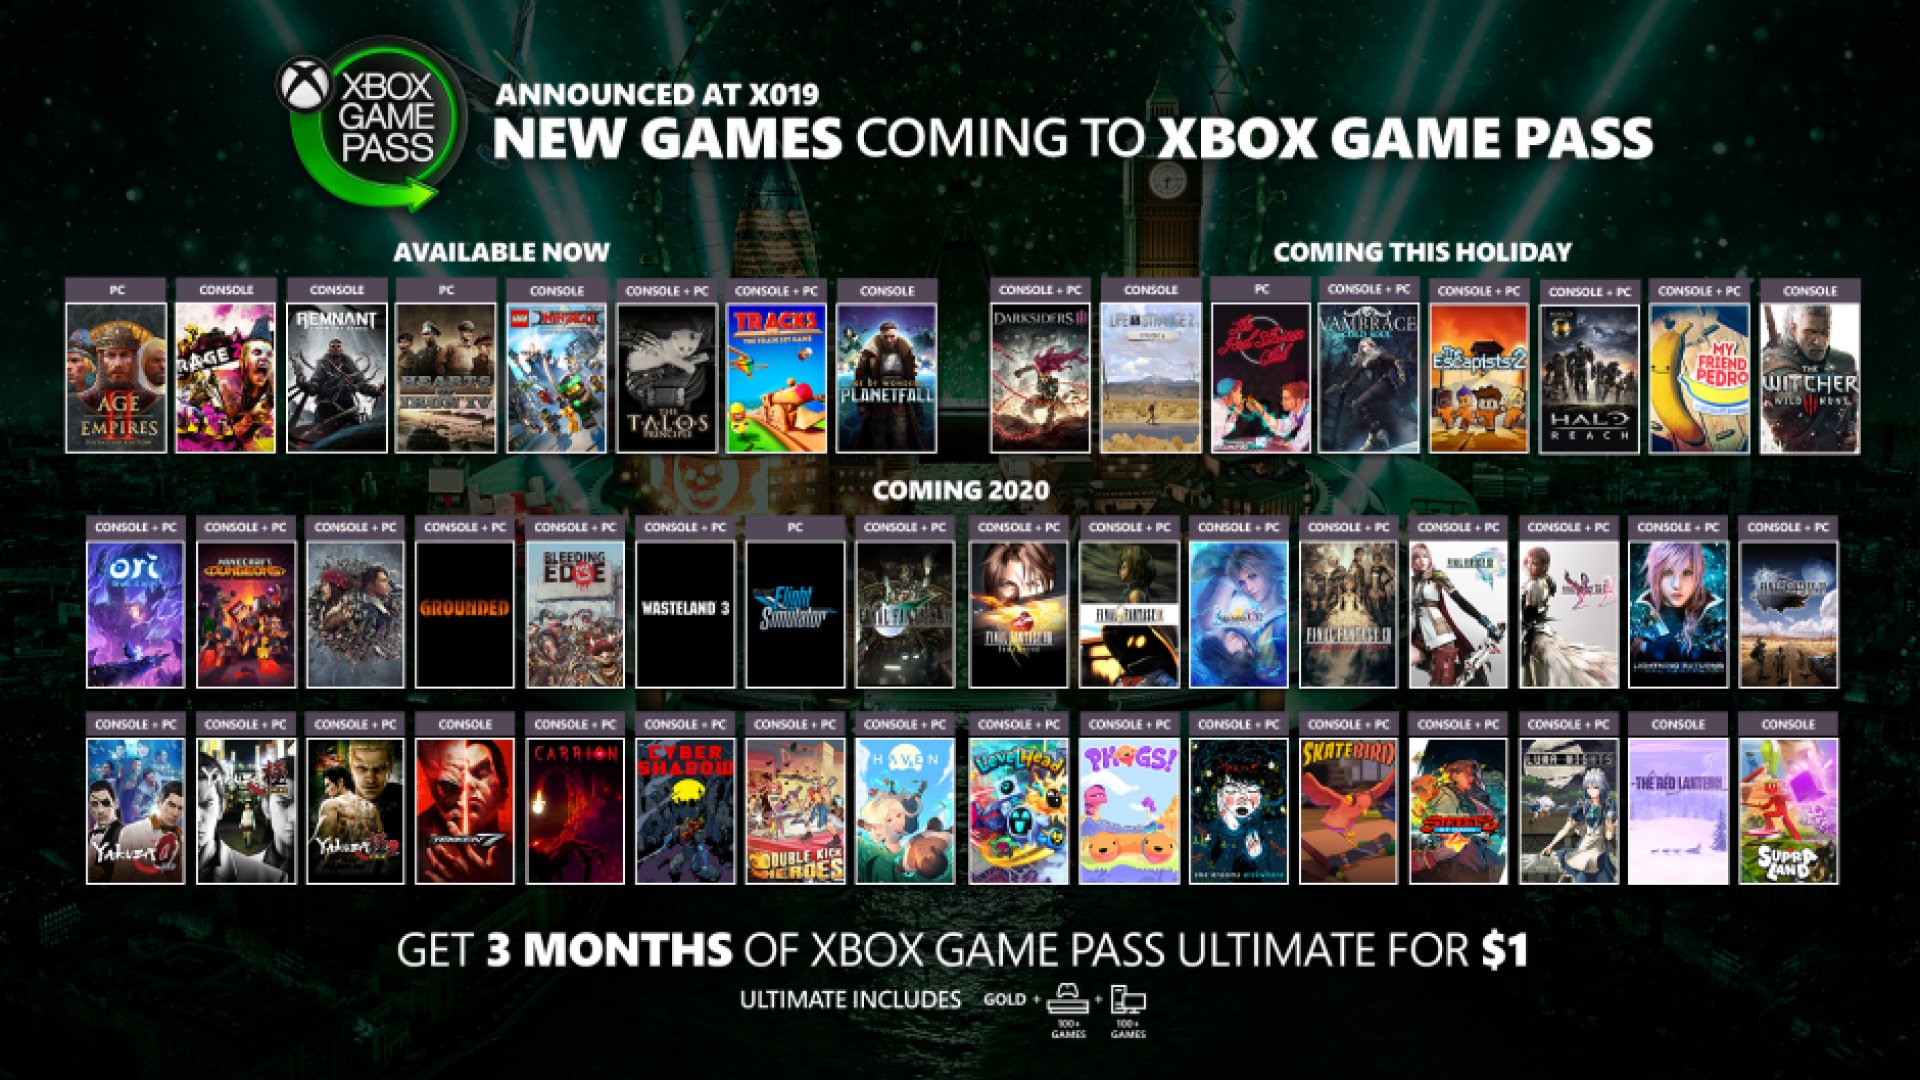 TudoGames: 10 jogos fantásticos do Xbox Game Pass para jogar agora